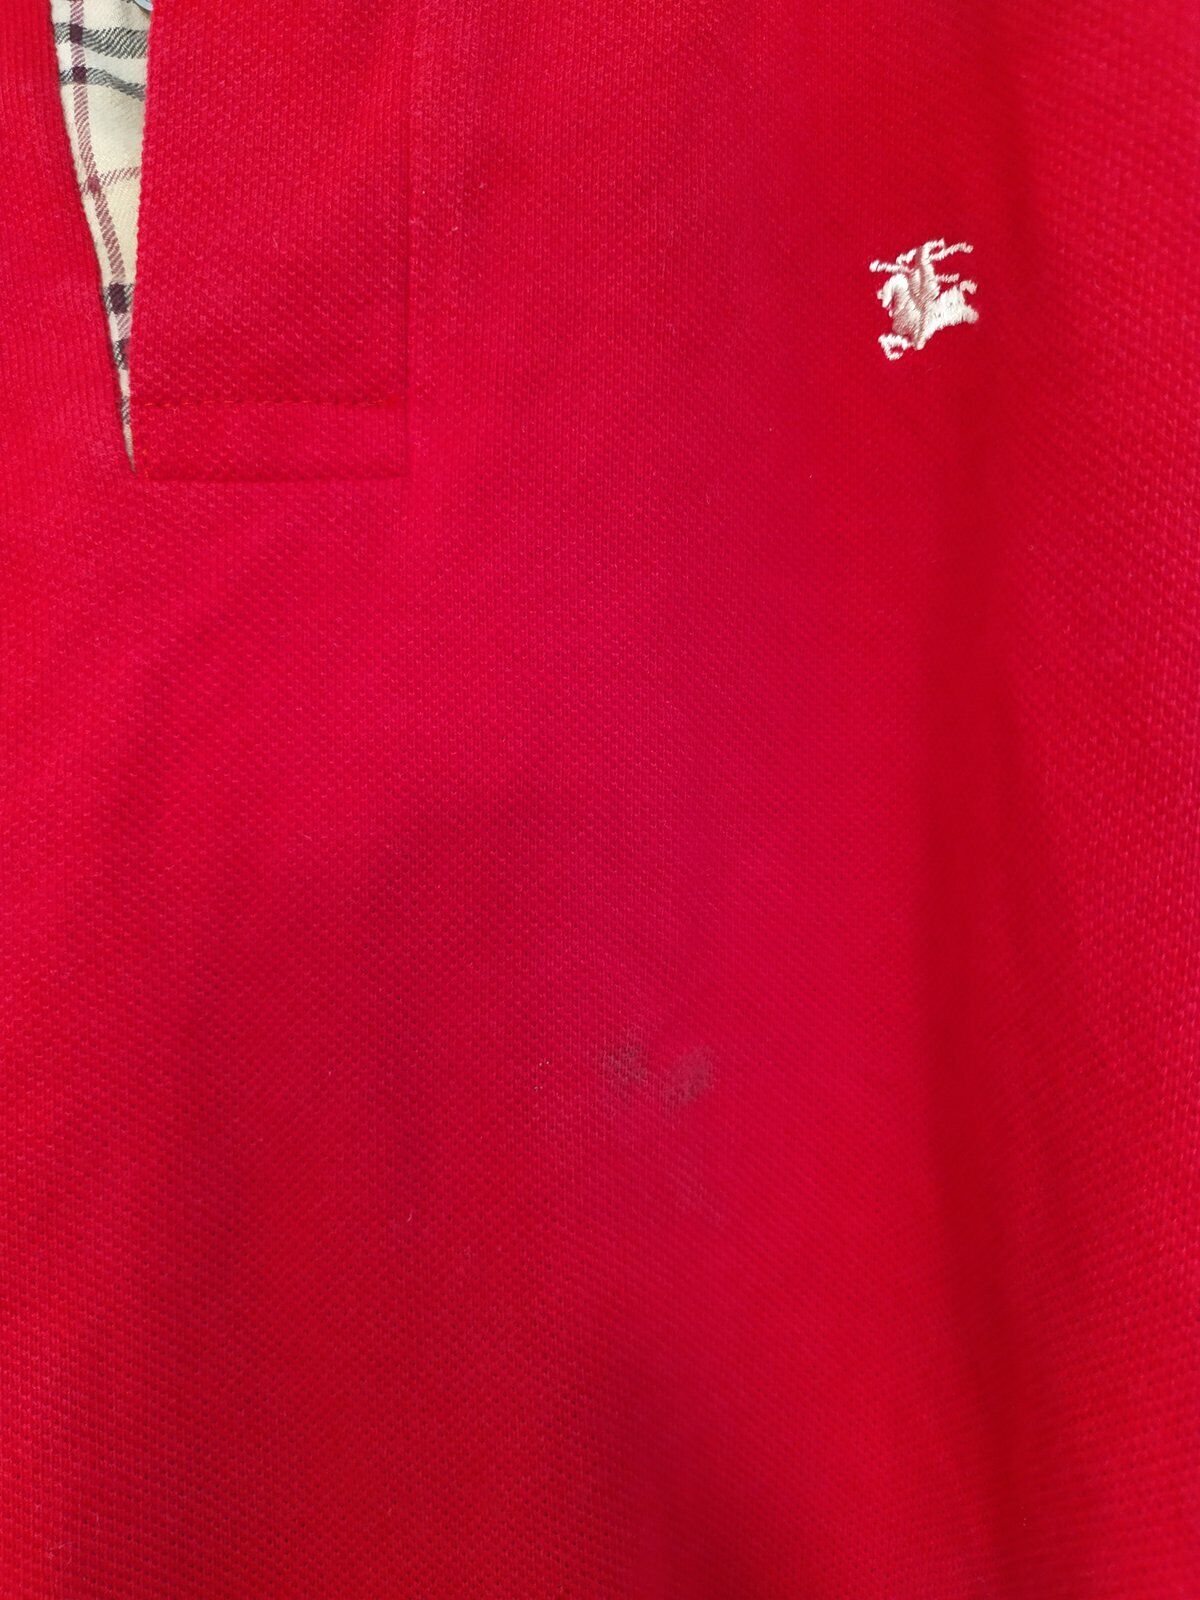 Burberry Polo Shirt Men'S Red Short Sleeve London 100% Cotton Check Nova  Size S